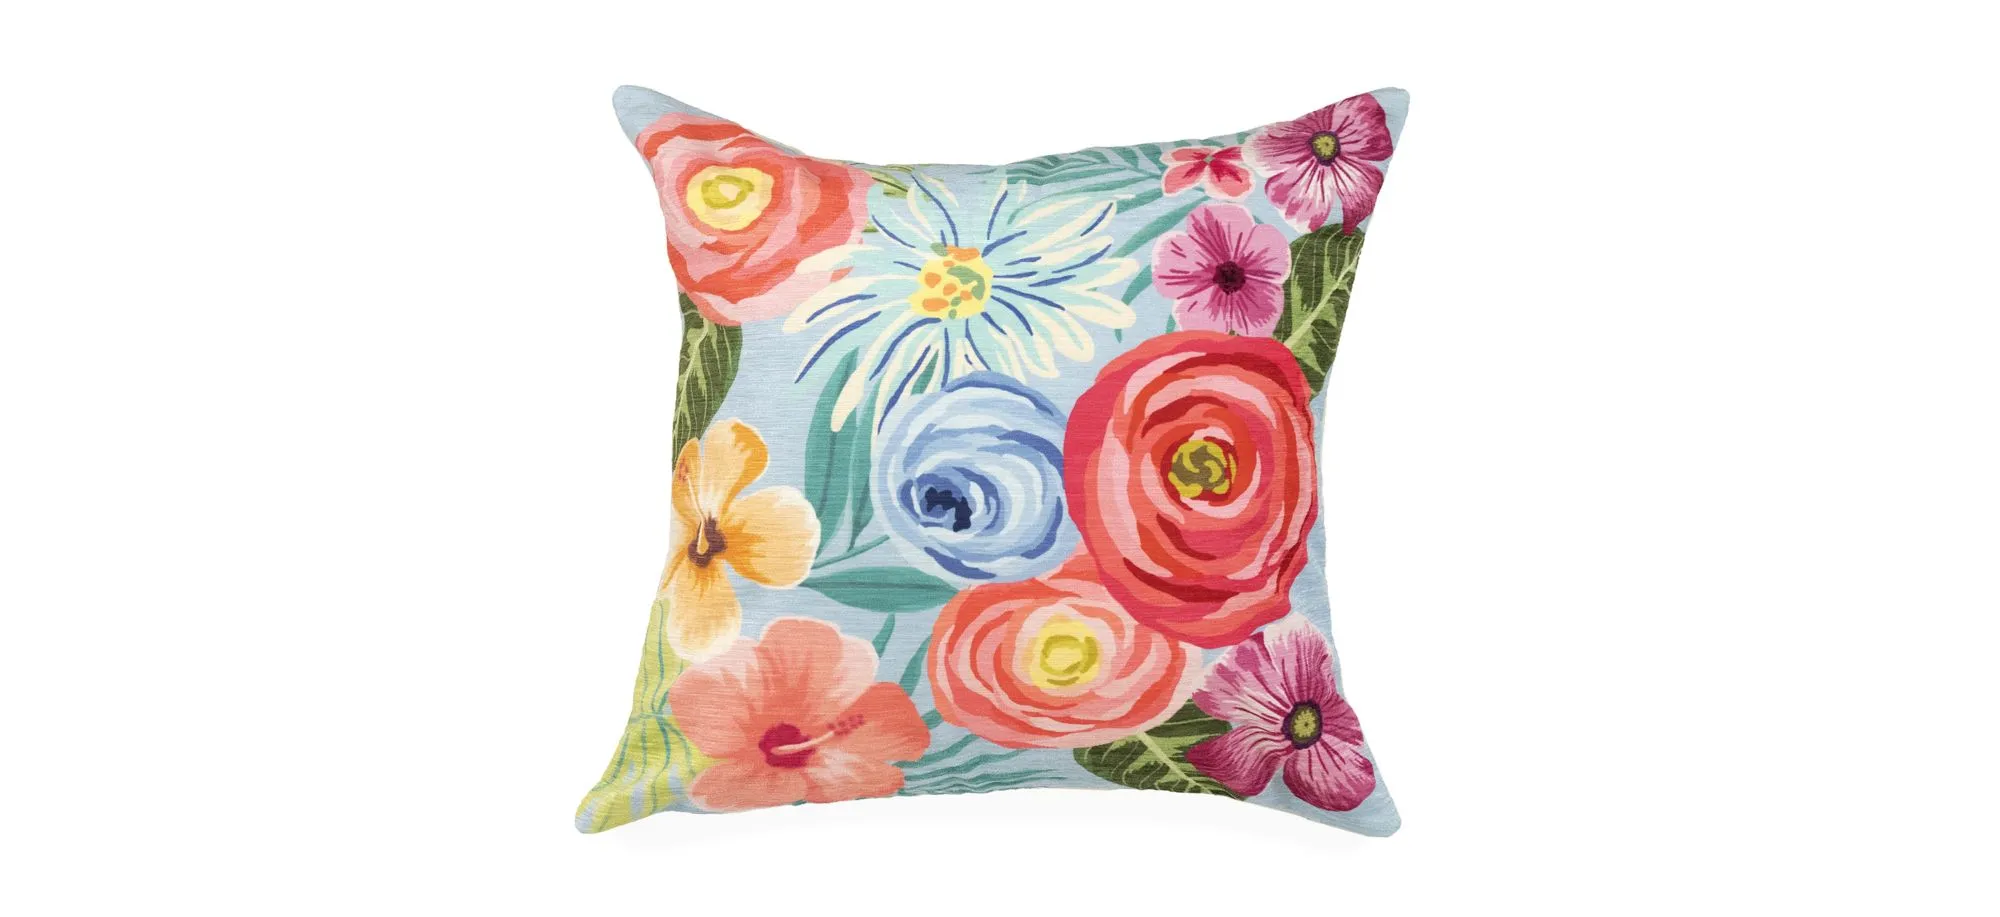 Liora Manne Illusions Flower Garden Pillow in Aqua by Trans-Ocean Import Co Inc